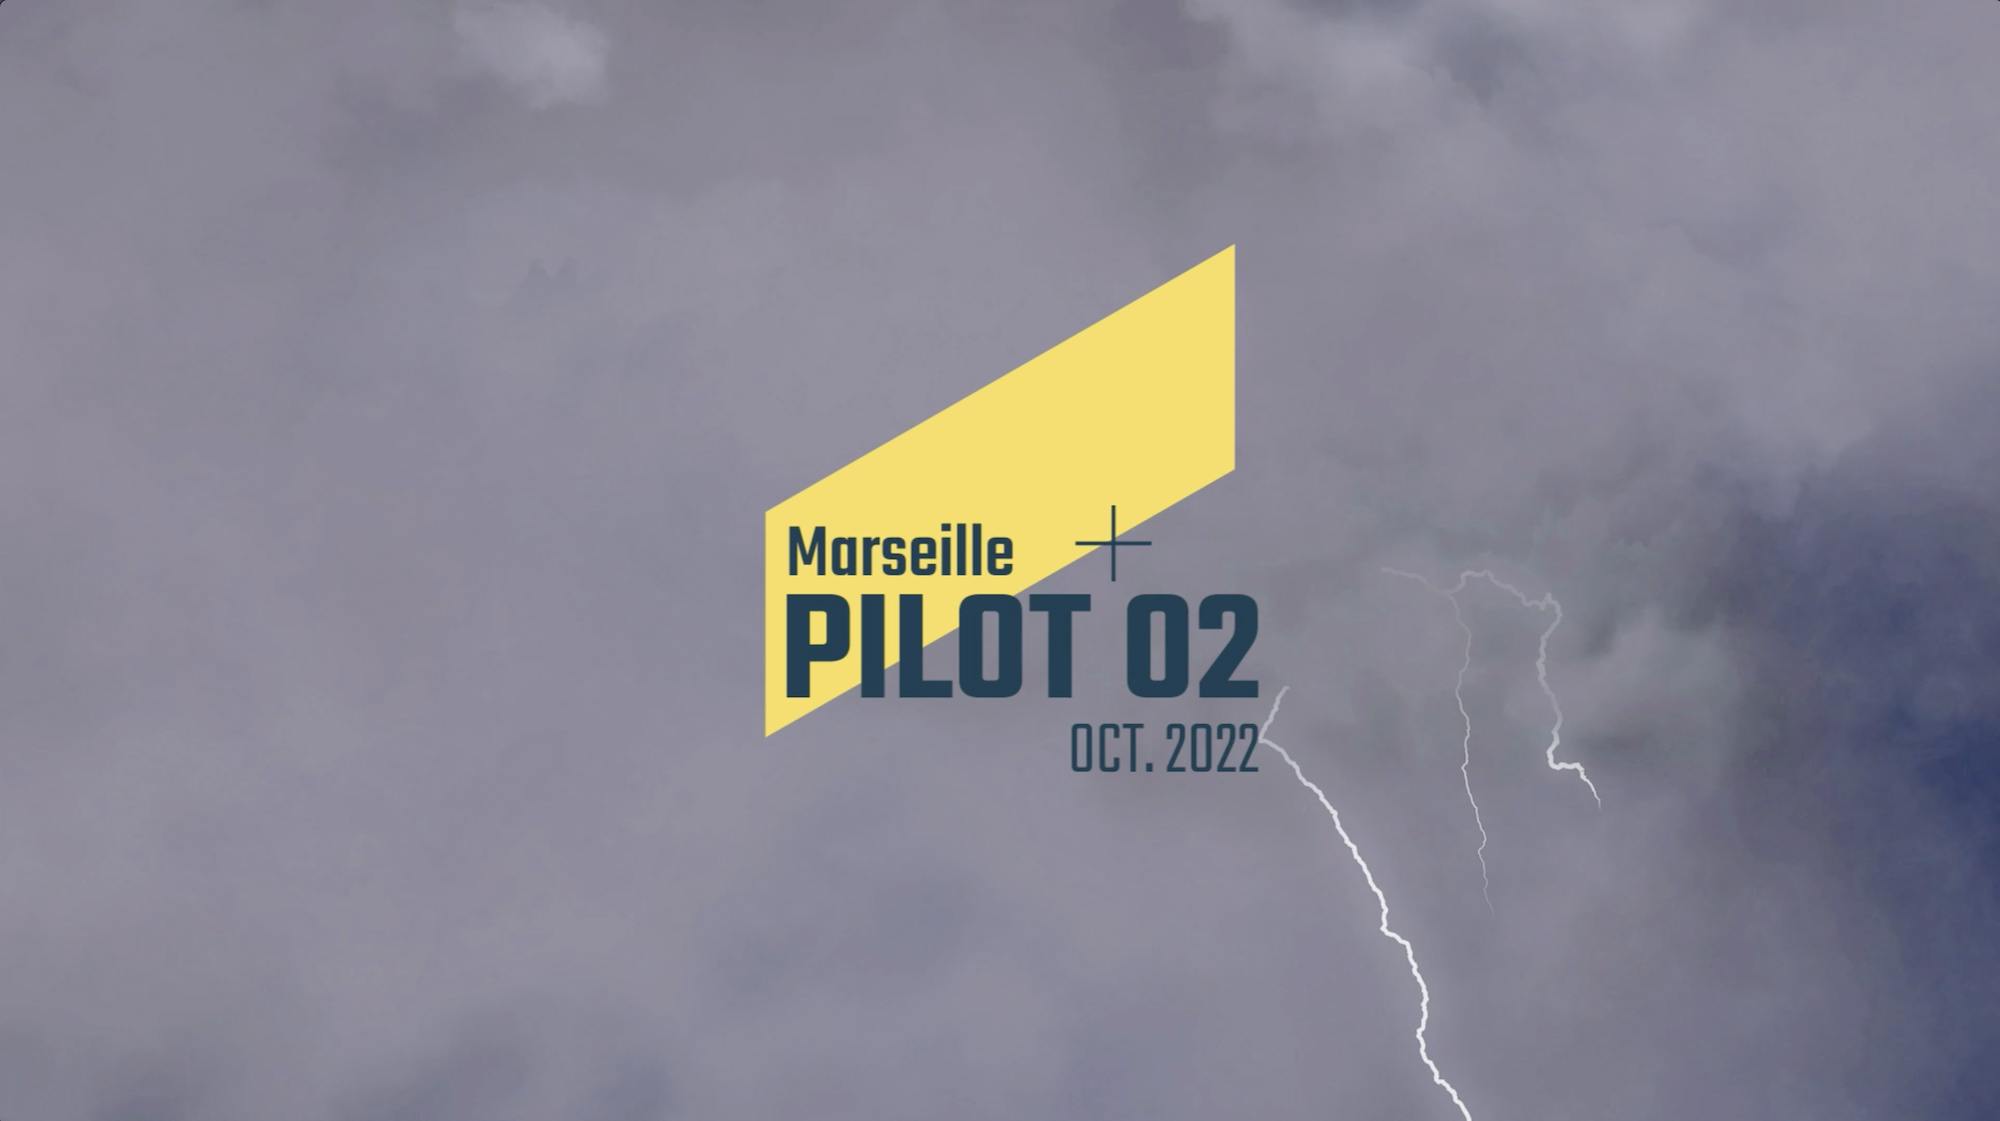 Pilot 2 logo, and date